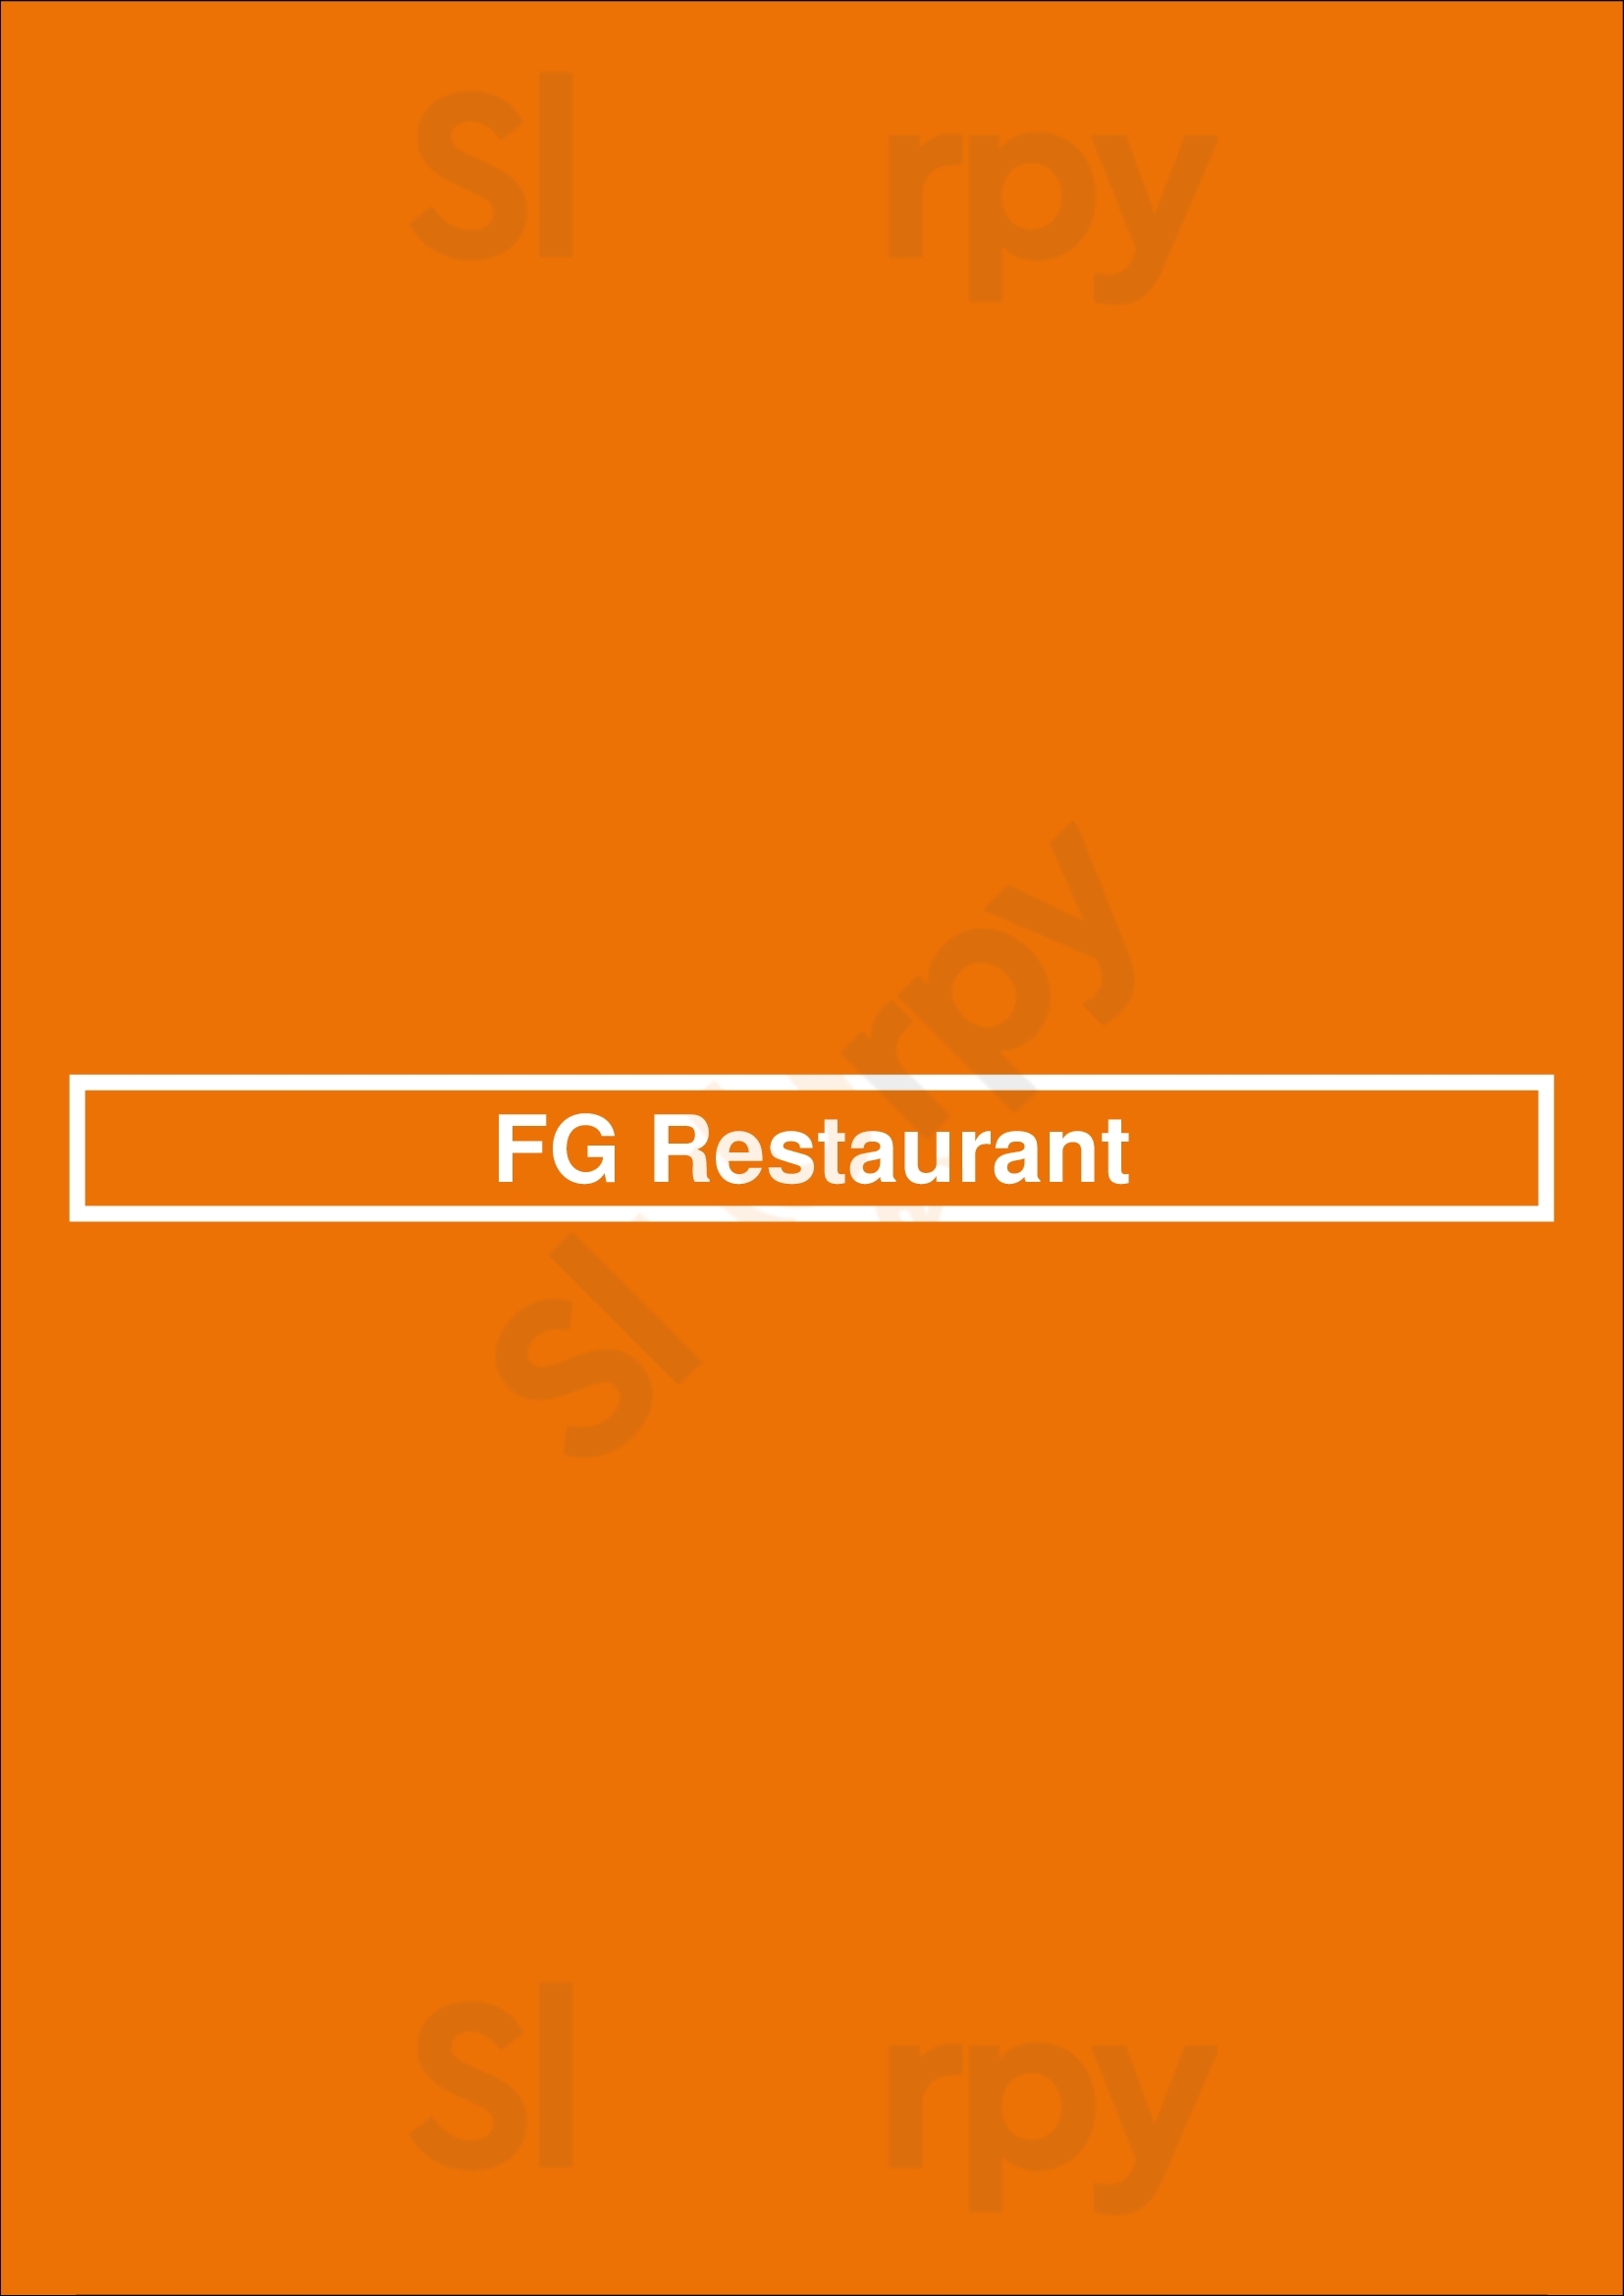 Fg Restaurant Rotterdam Menu - 1